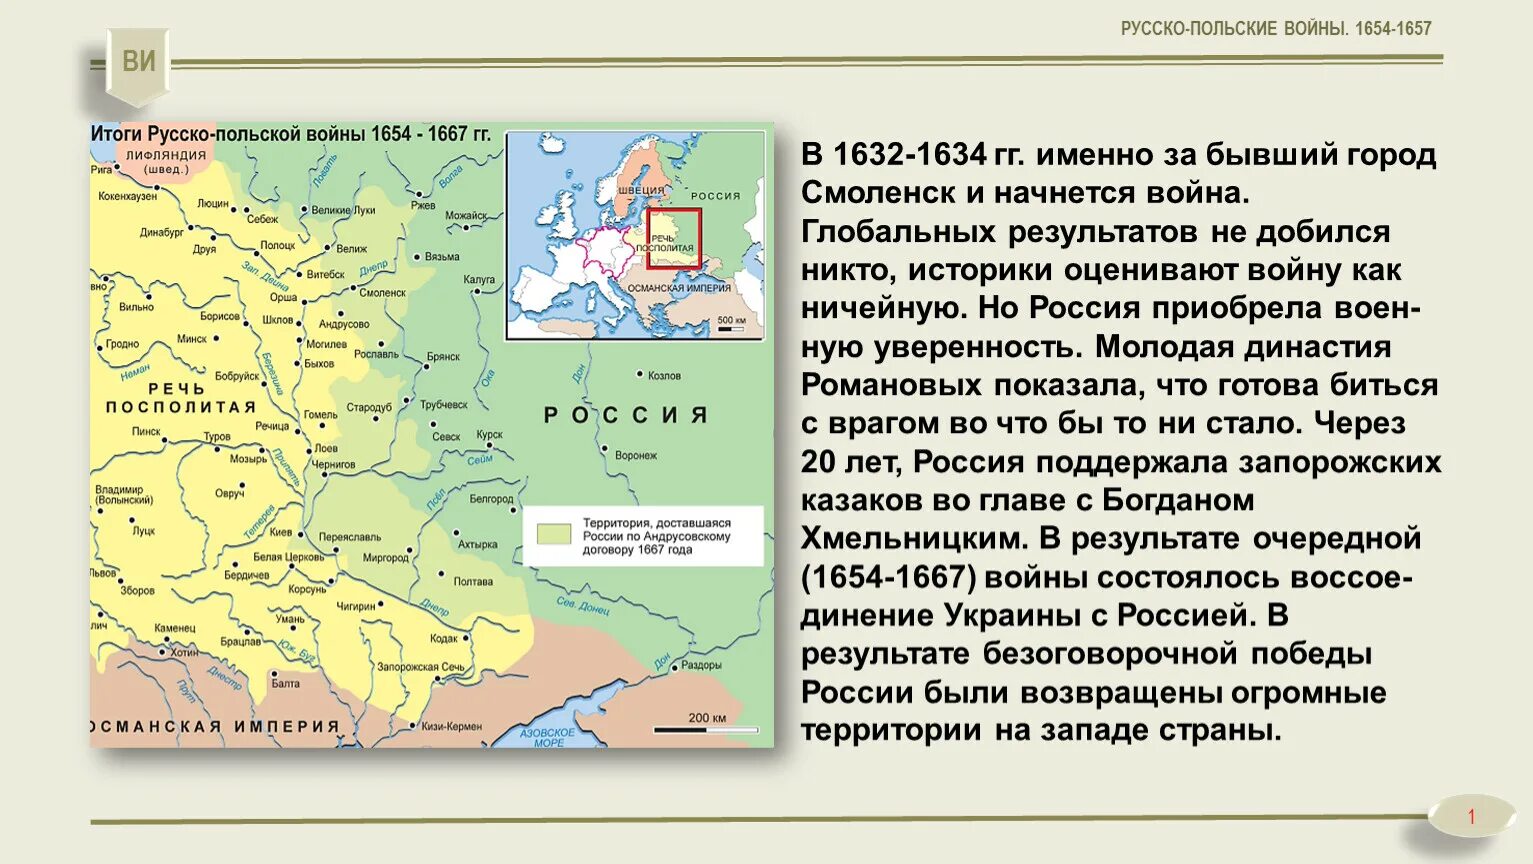 1632 г россия